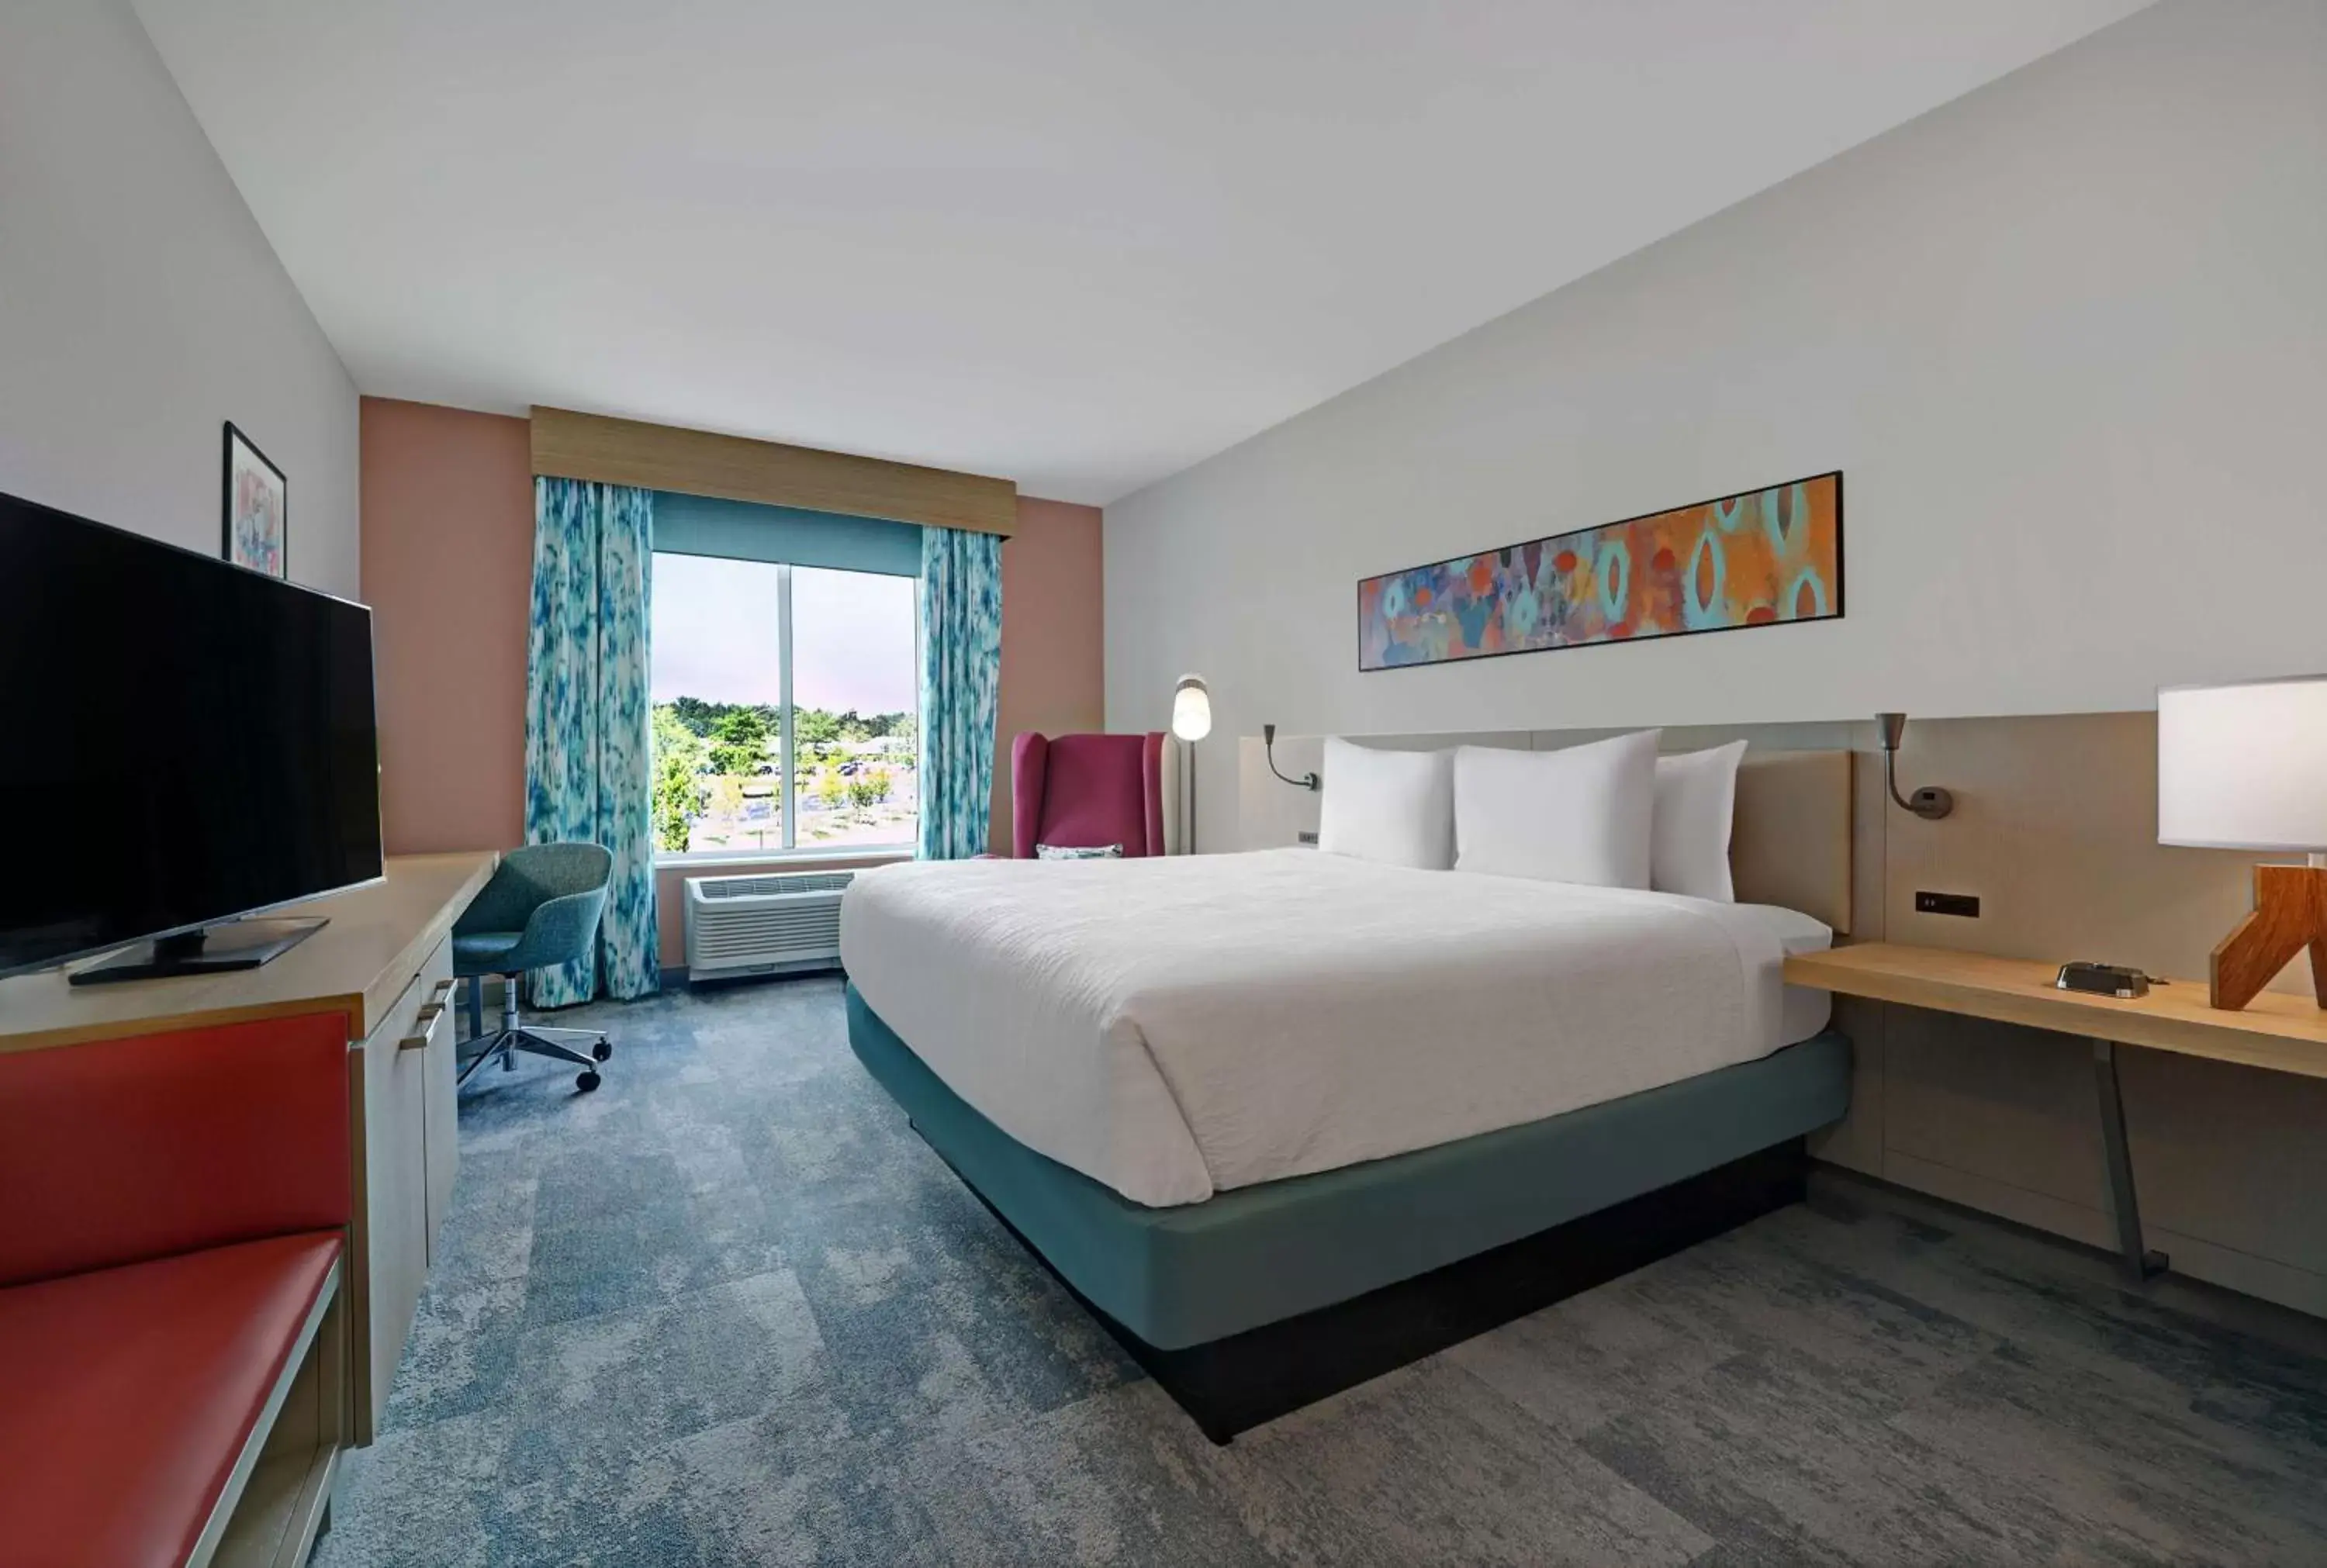 Bedroom in Hilton Garden Inn Manassas